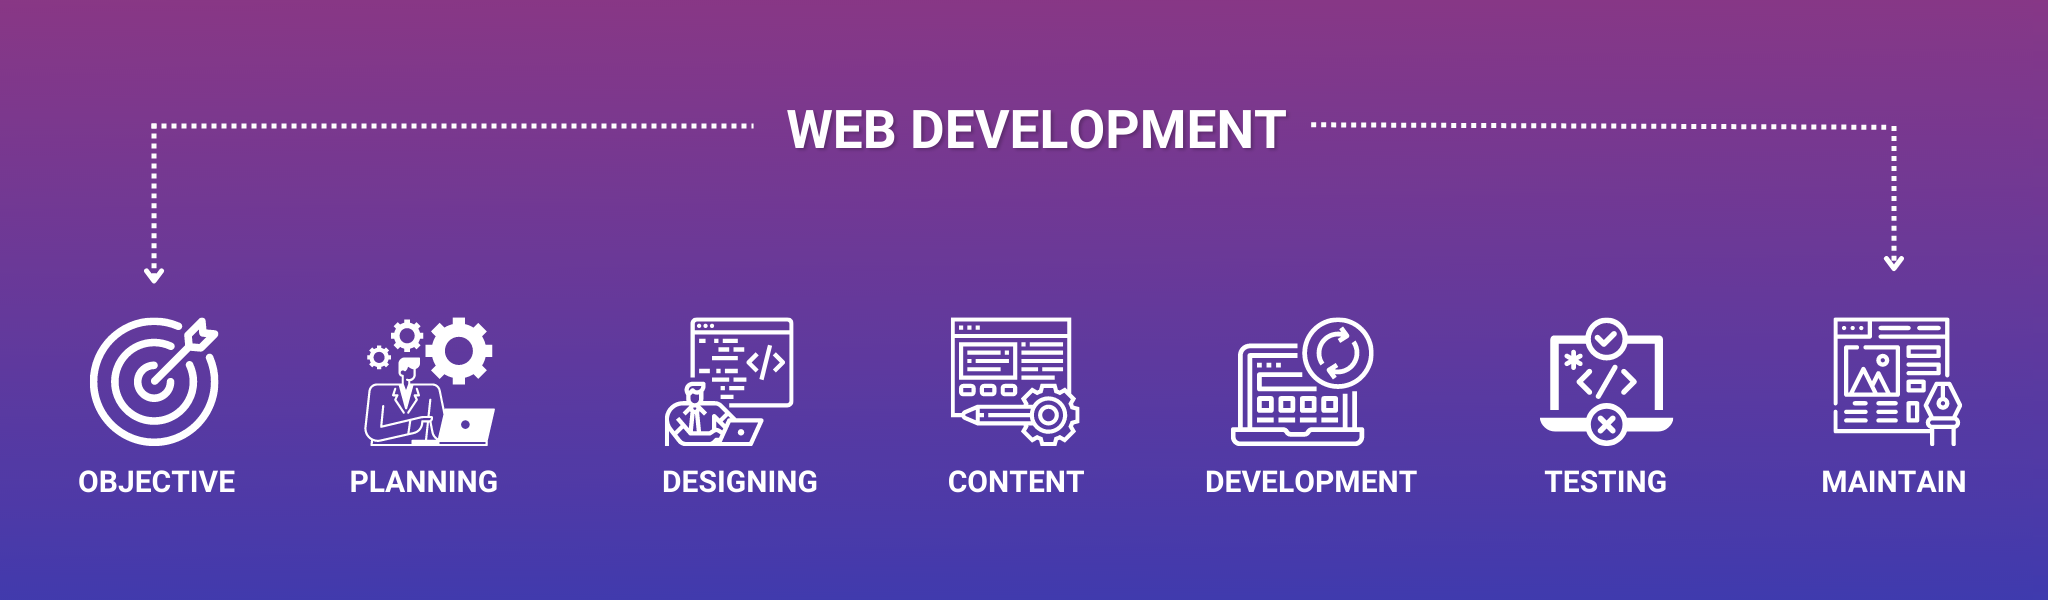 Web Development Steps